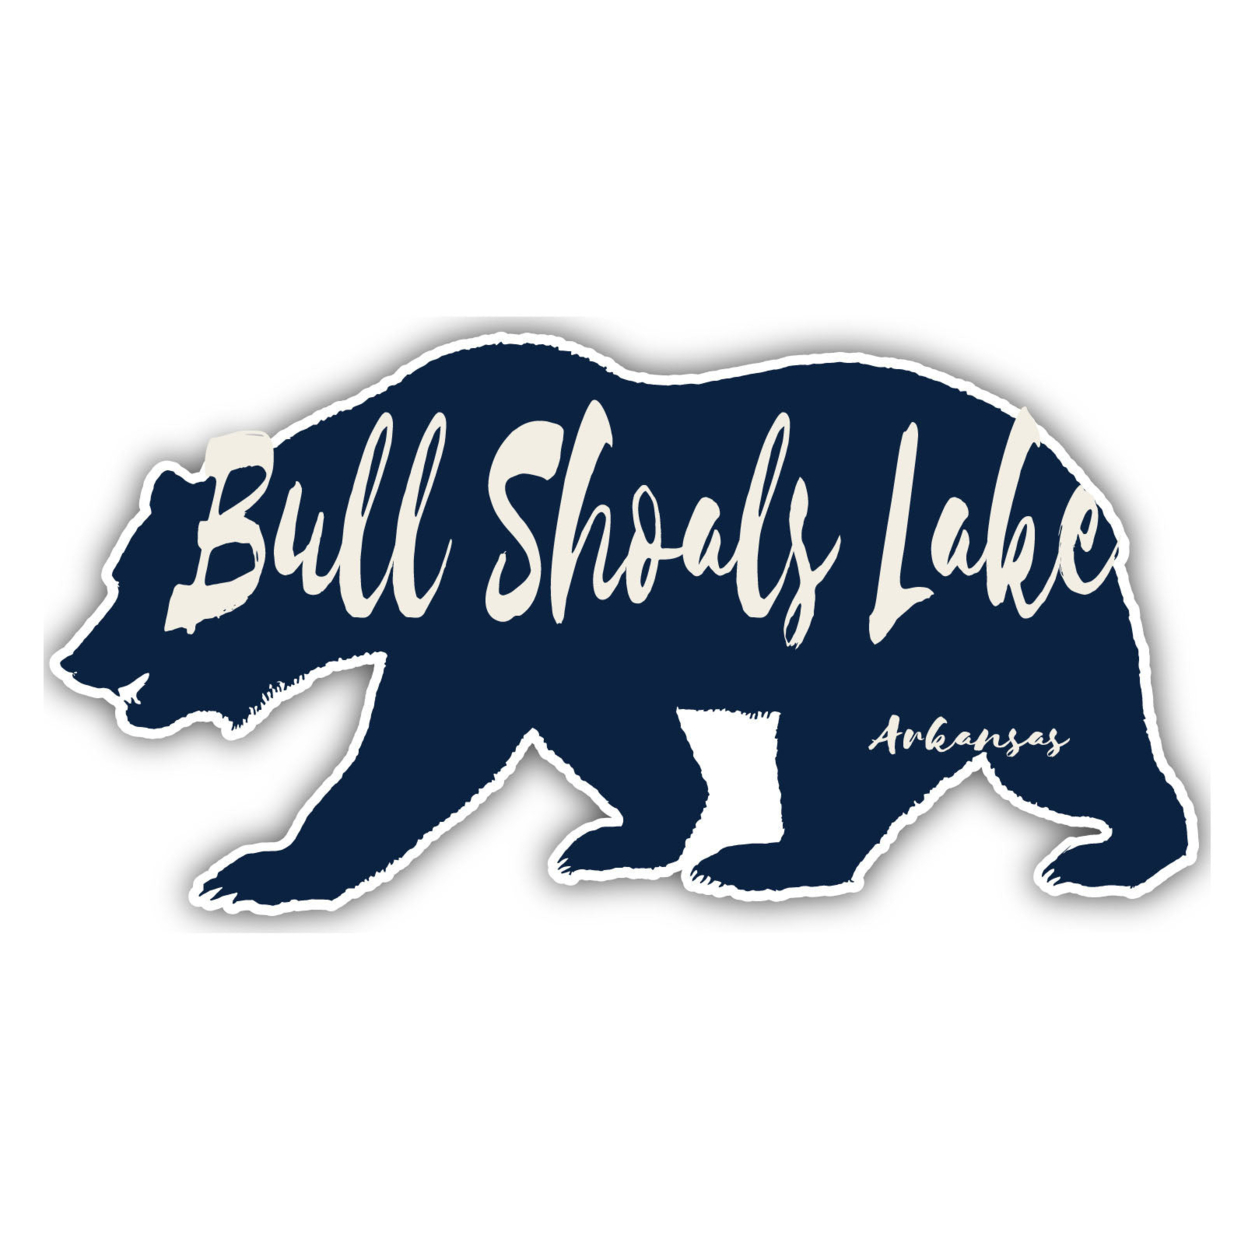 Bull Shoals Lake Arkansas Souvenir Decorative Stickers (Choose Theme And Size) - 4-Pack, 12-Inch, Tent